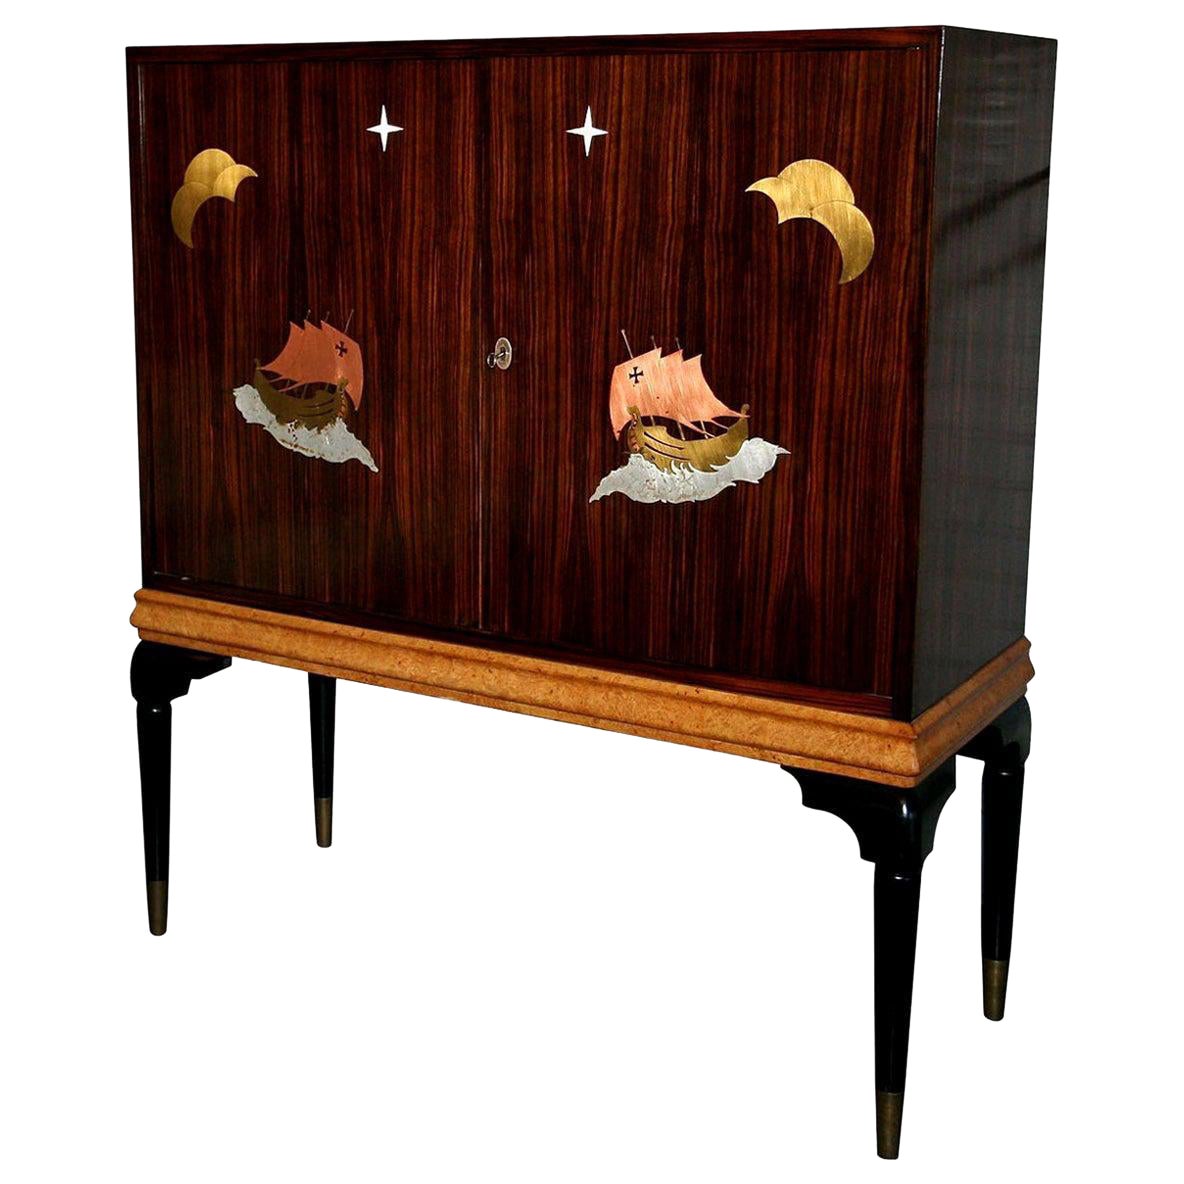 1940s Macassar Ebony and Burl Wood Bar Cabinet by Osvaldo Borsani For Sale